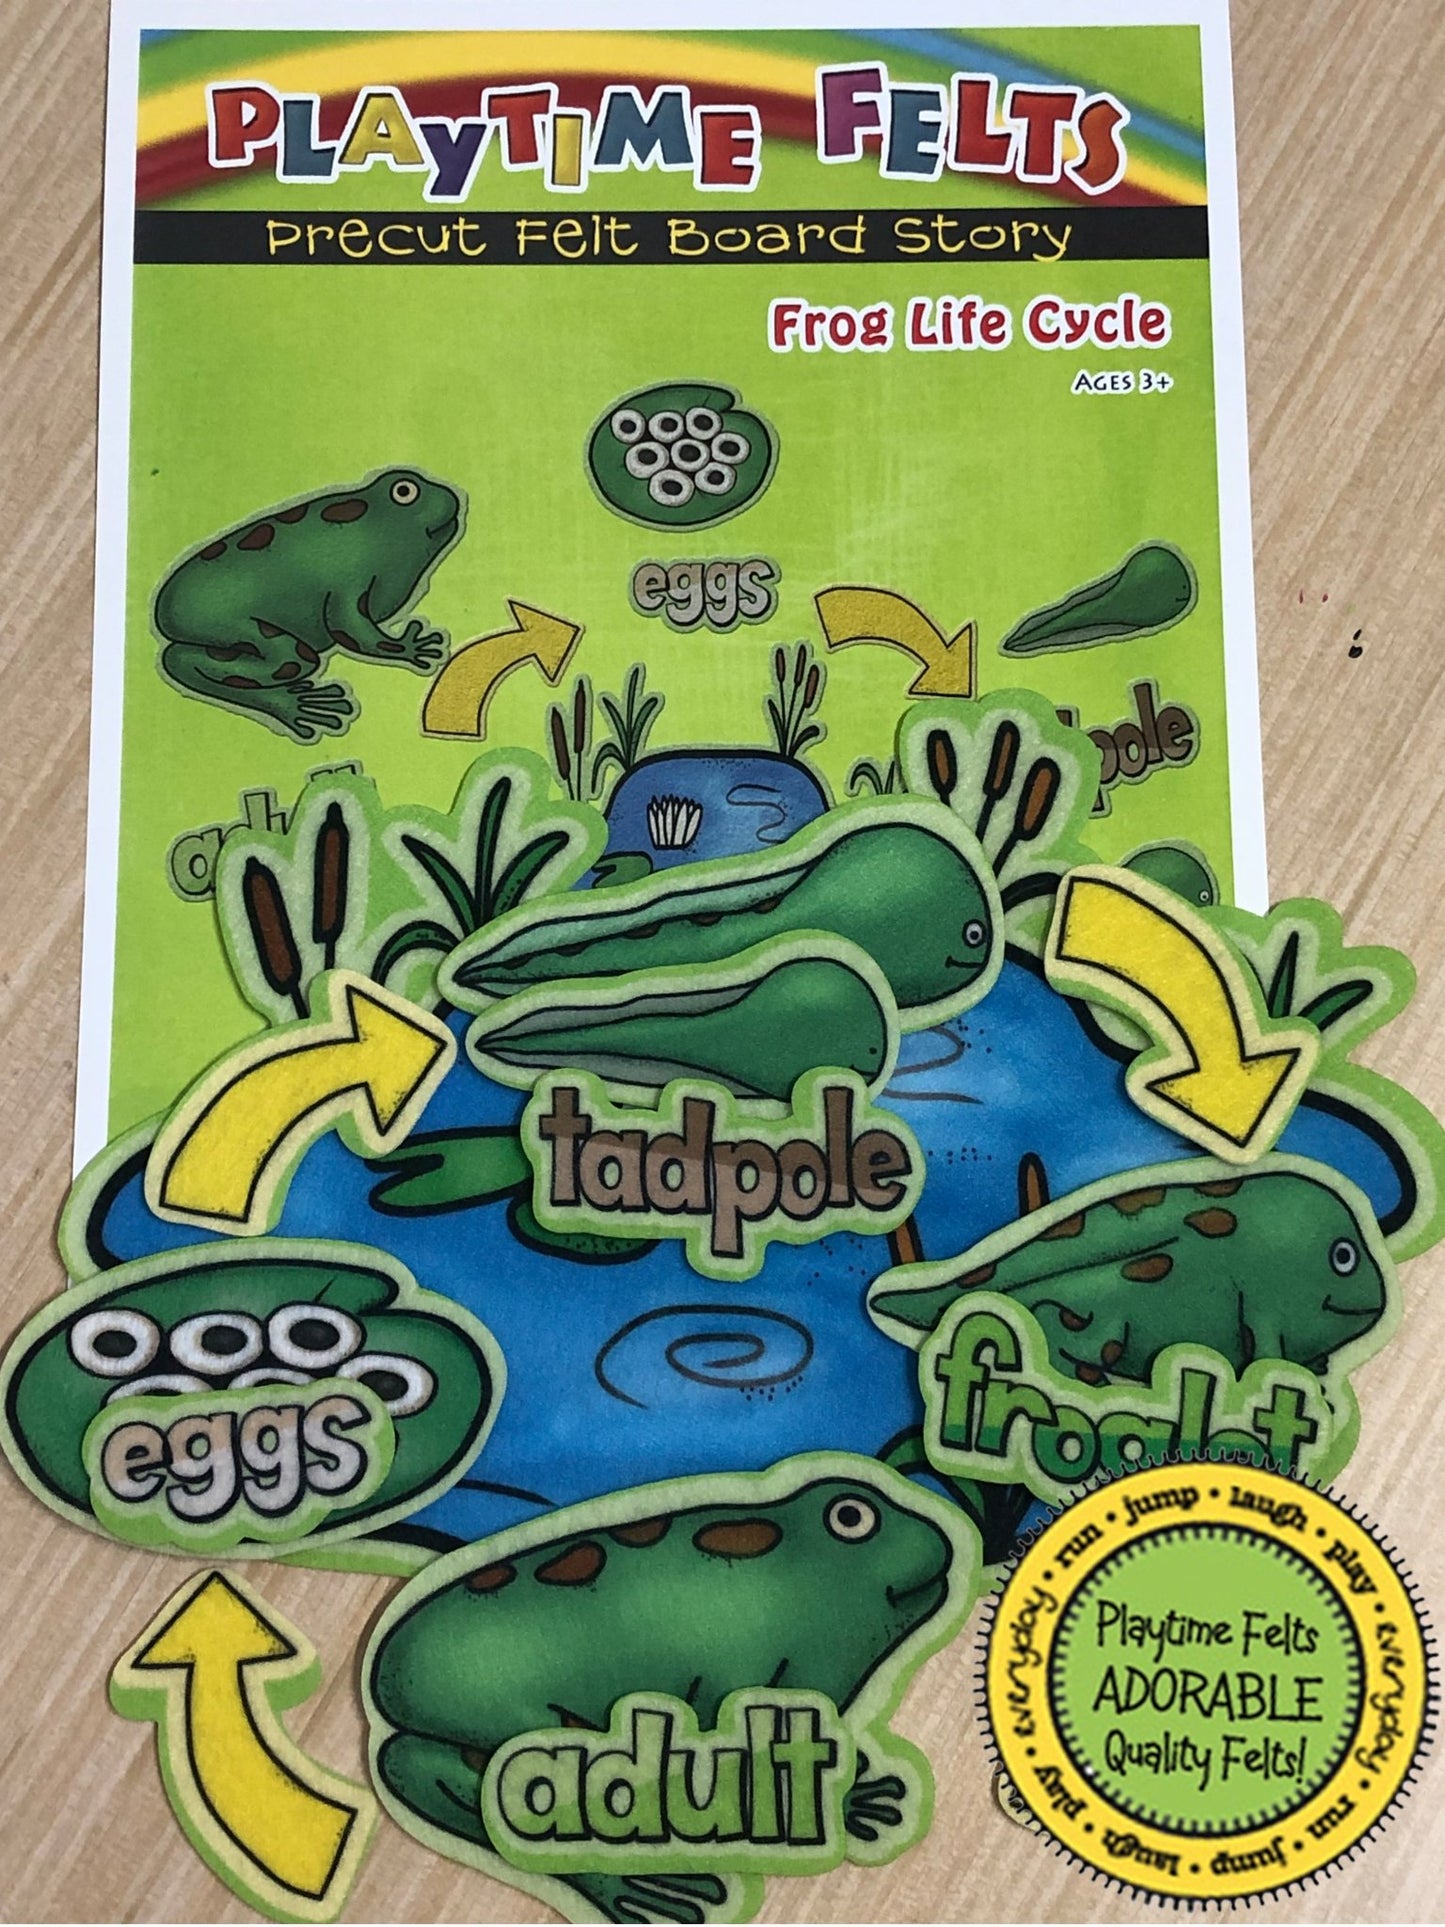 Frog Life Cycle | Felt Board Story Set for Preschool - Felt Board Stories for Preschool Classroom Playtime Felts